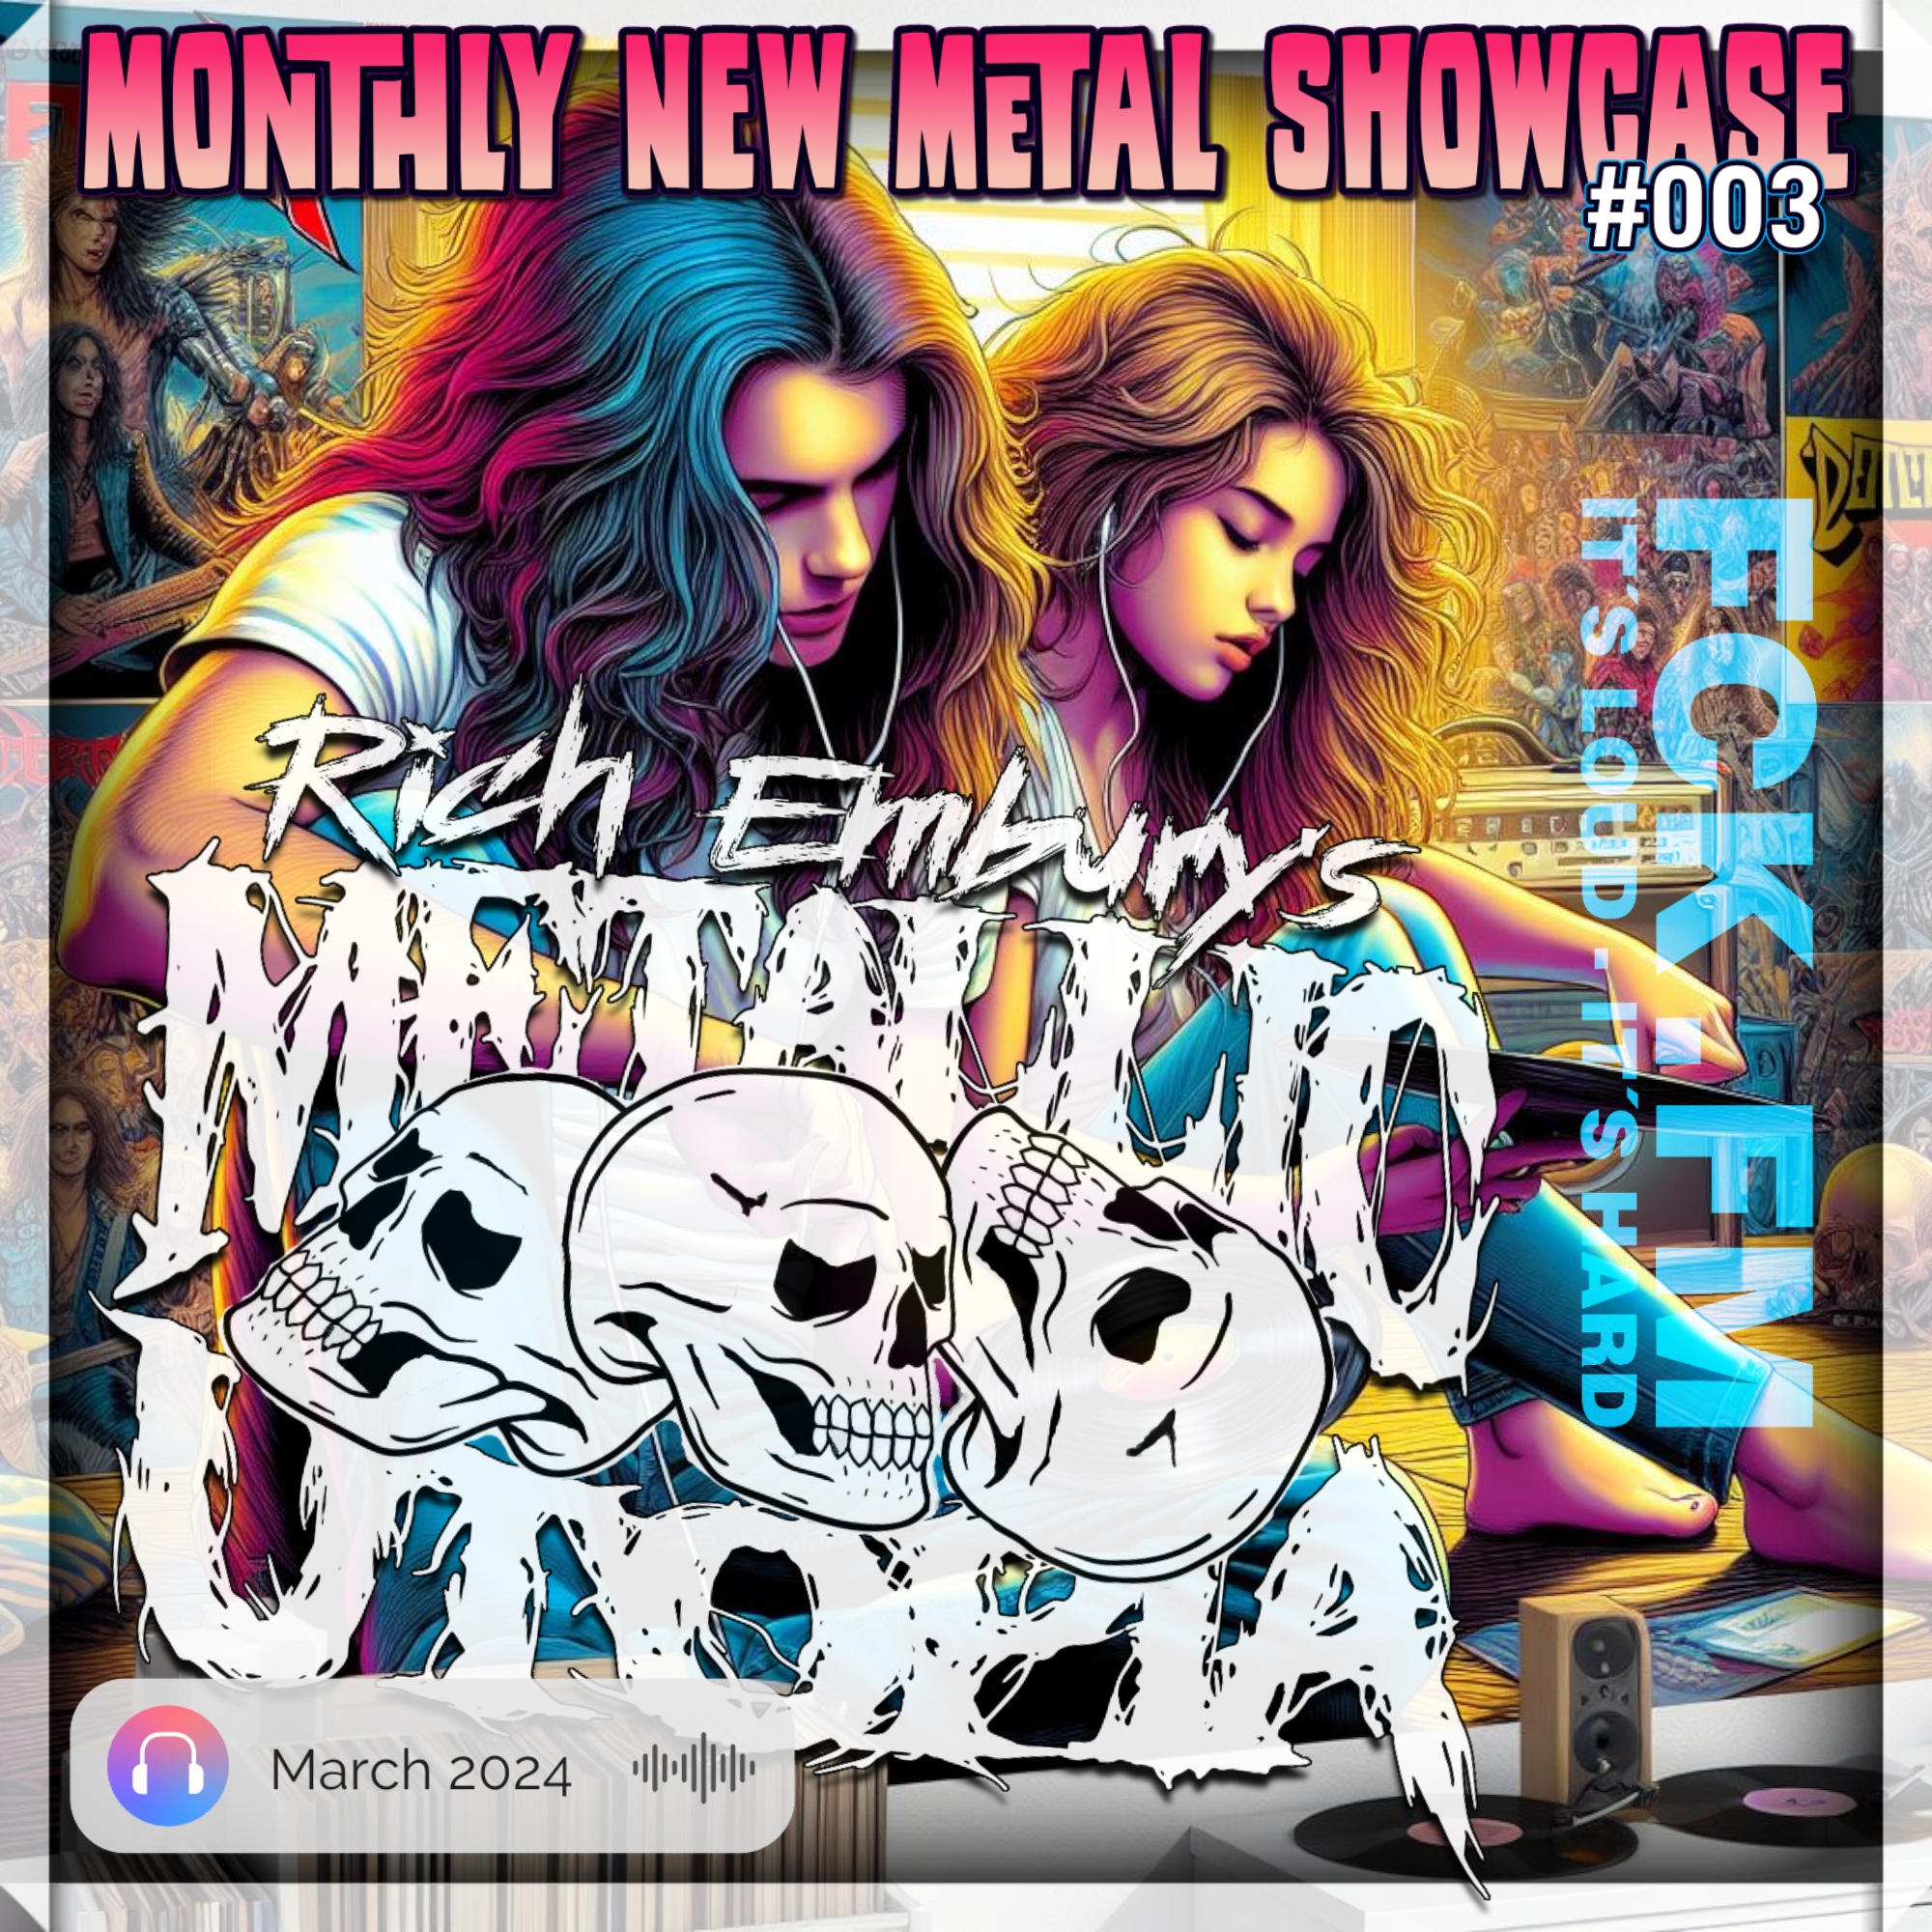 Rich Embury’s METALLIC UTOPIA // Monthly NEW METAL Showcase #003 (Mar. 2024) post thumbnail image